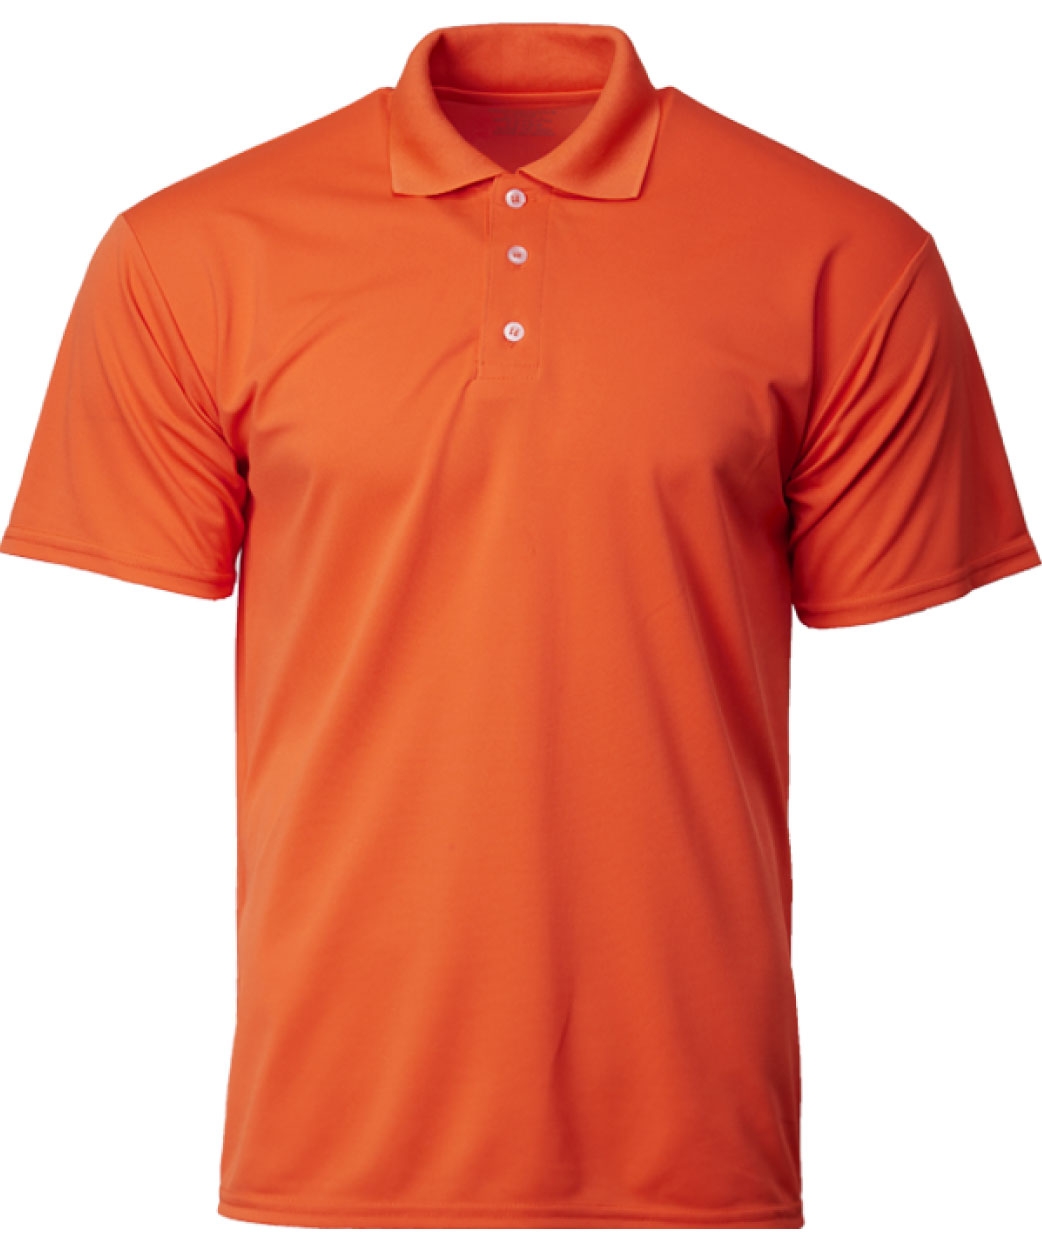 orange dri fit polo shirt